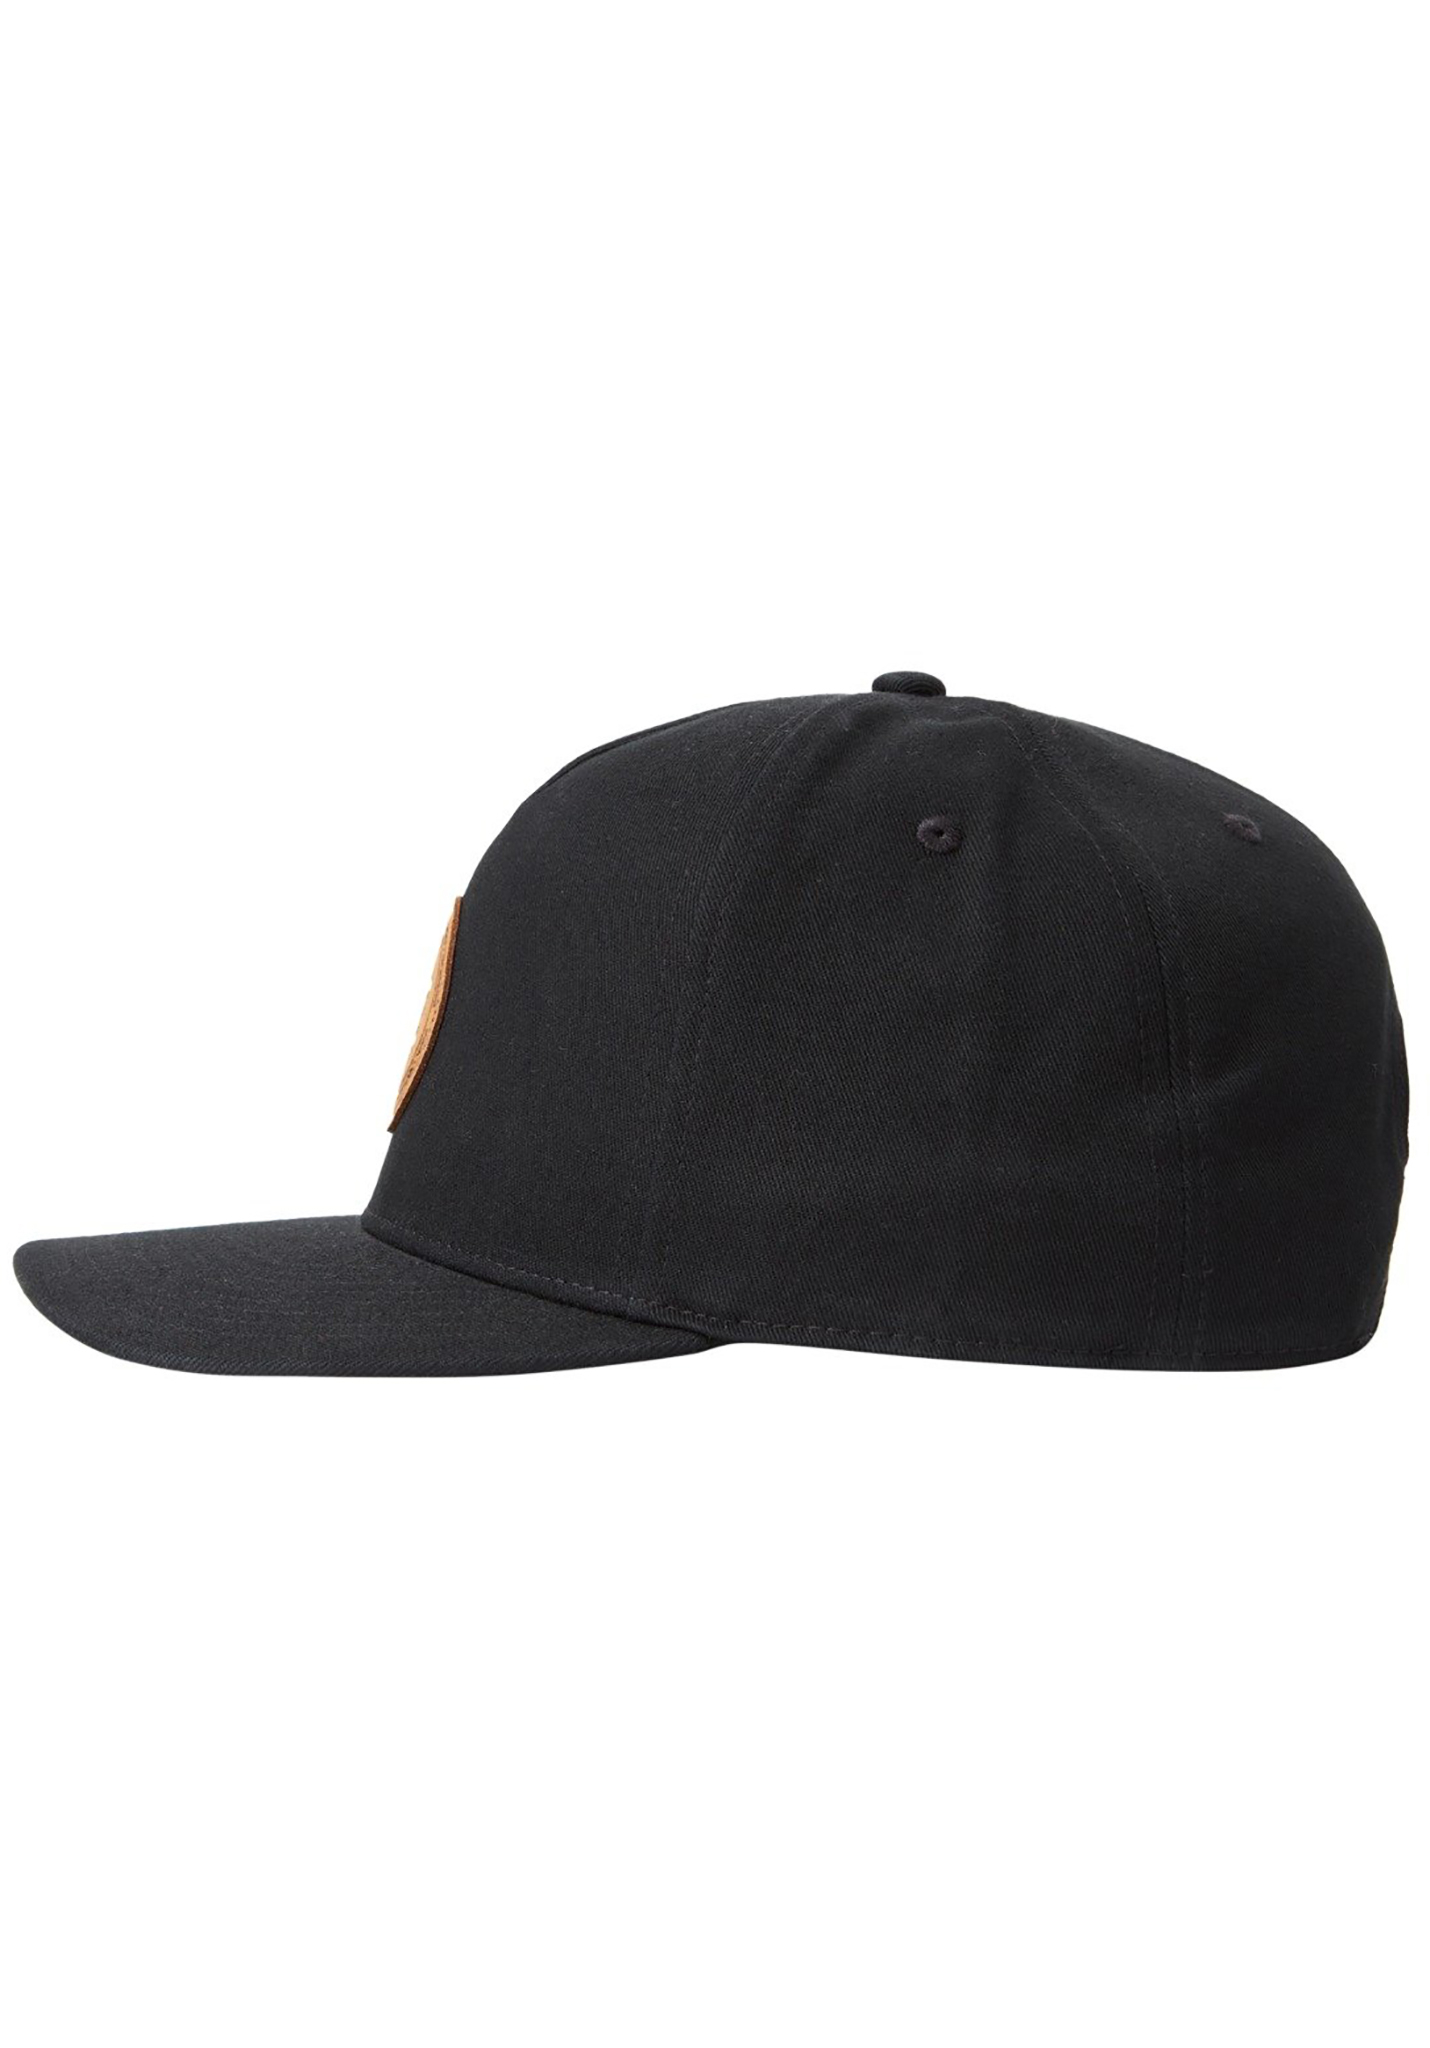 DC Reynotts 5 Strapback Cap black One Size